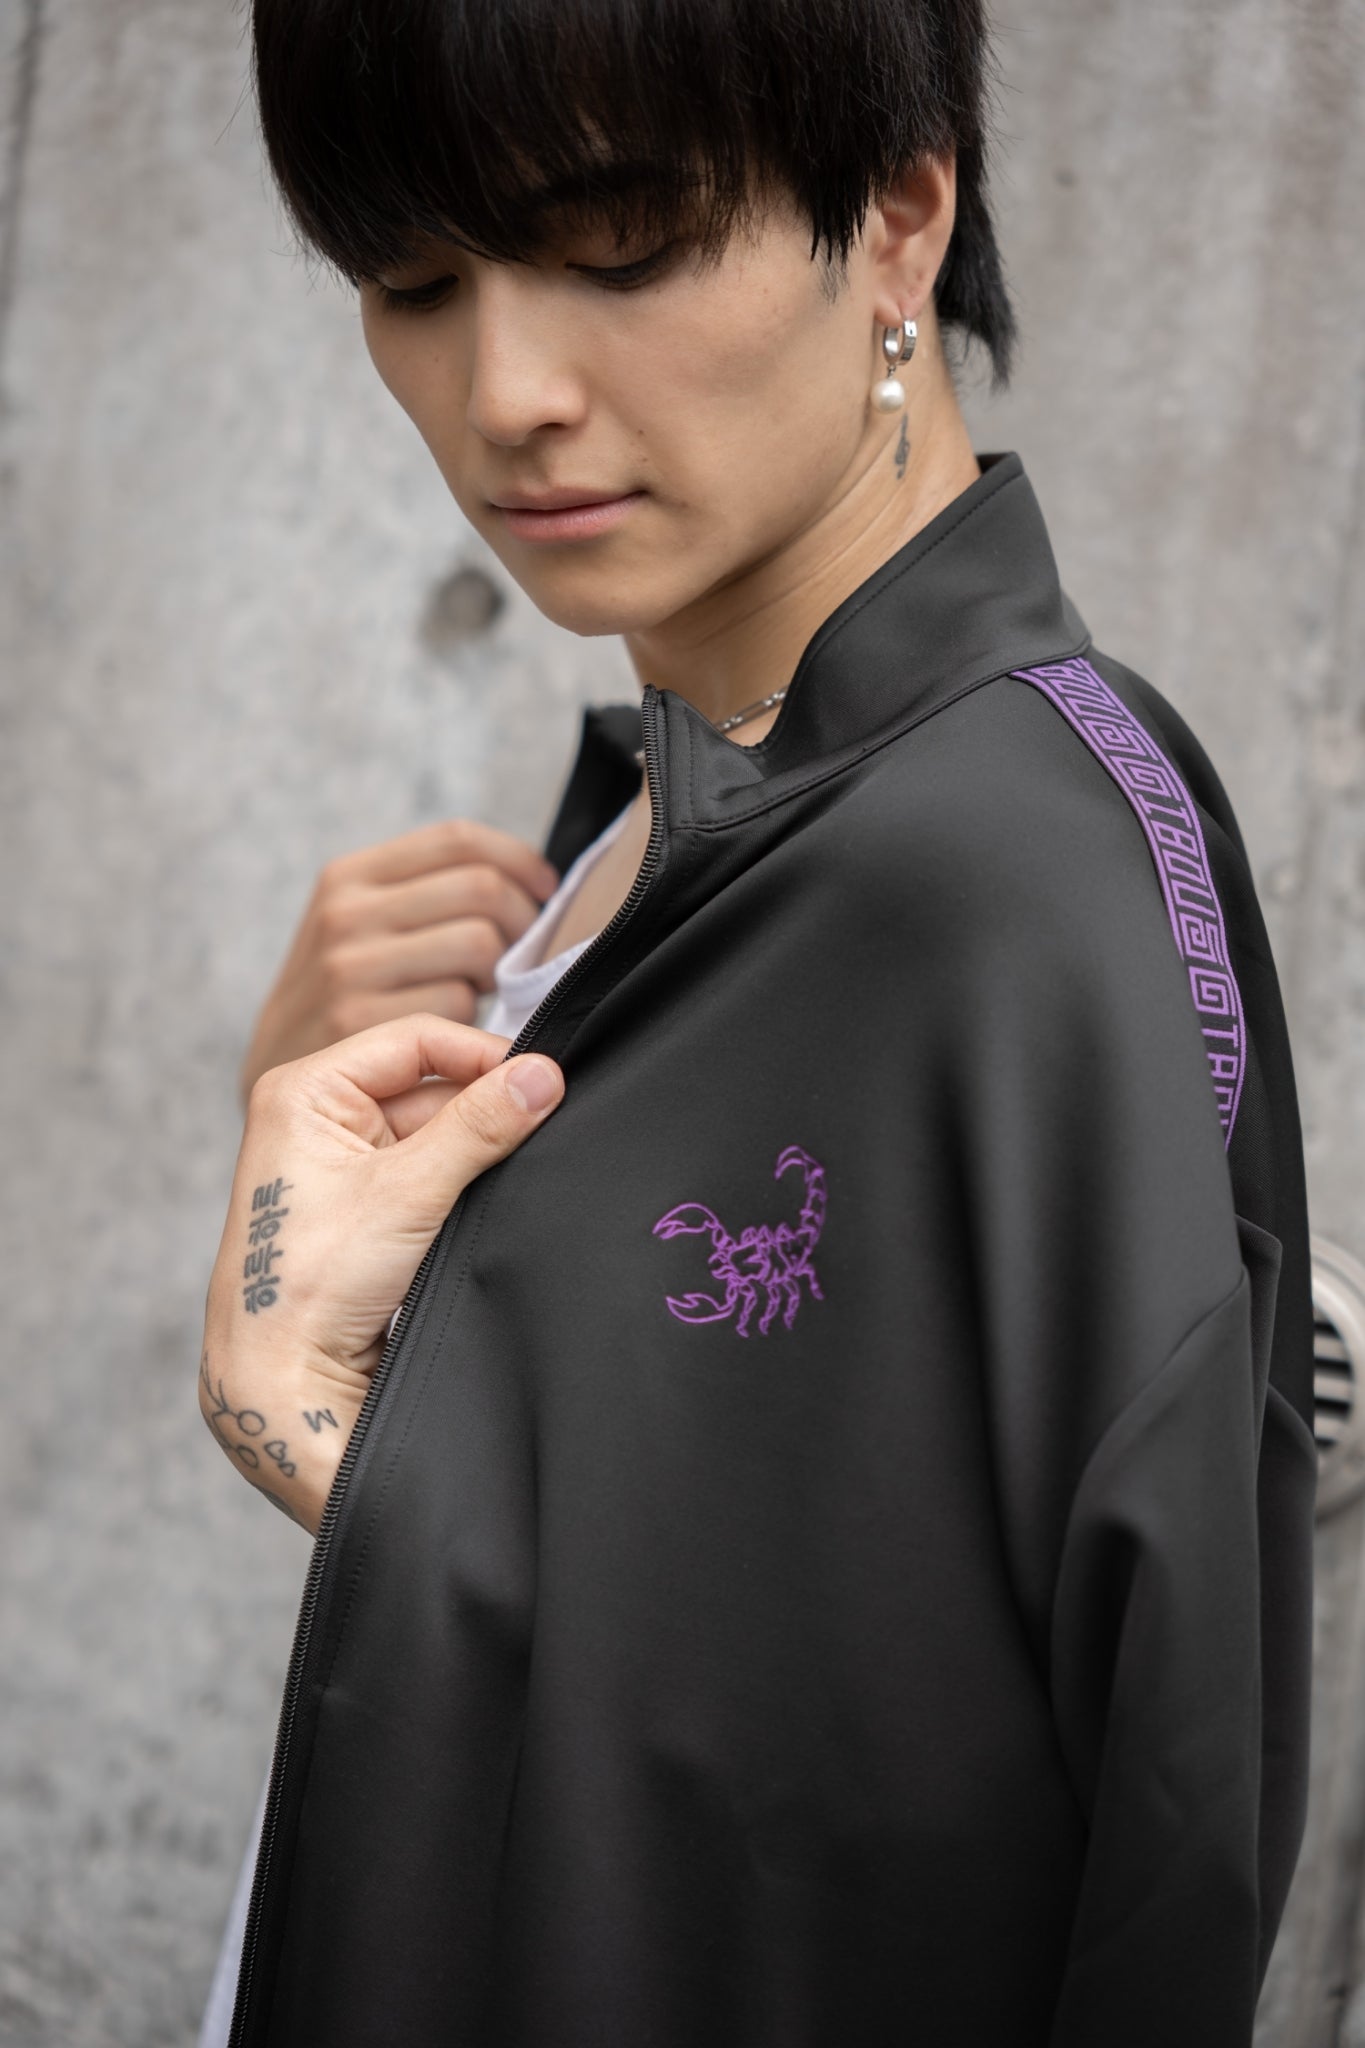 【再販】gibous logo jersey scorpion black purple tops